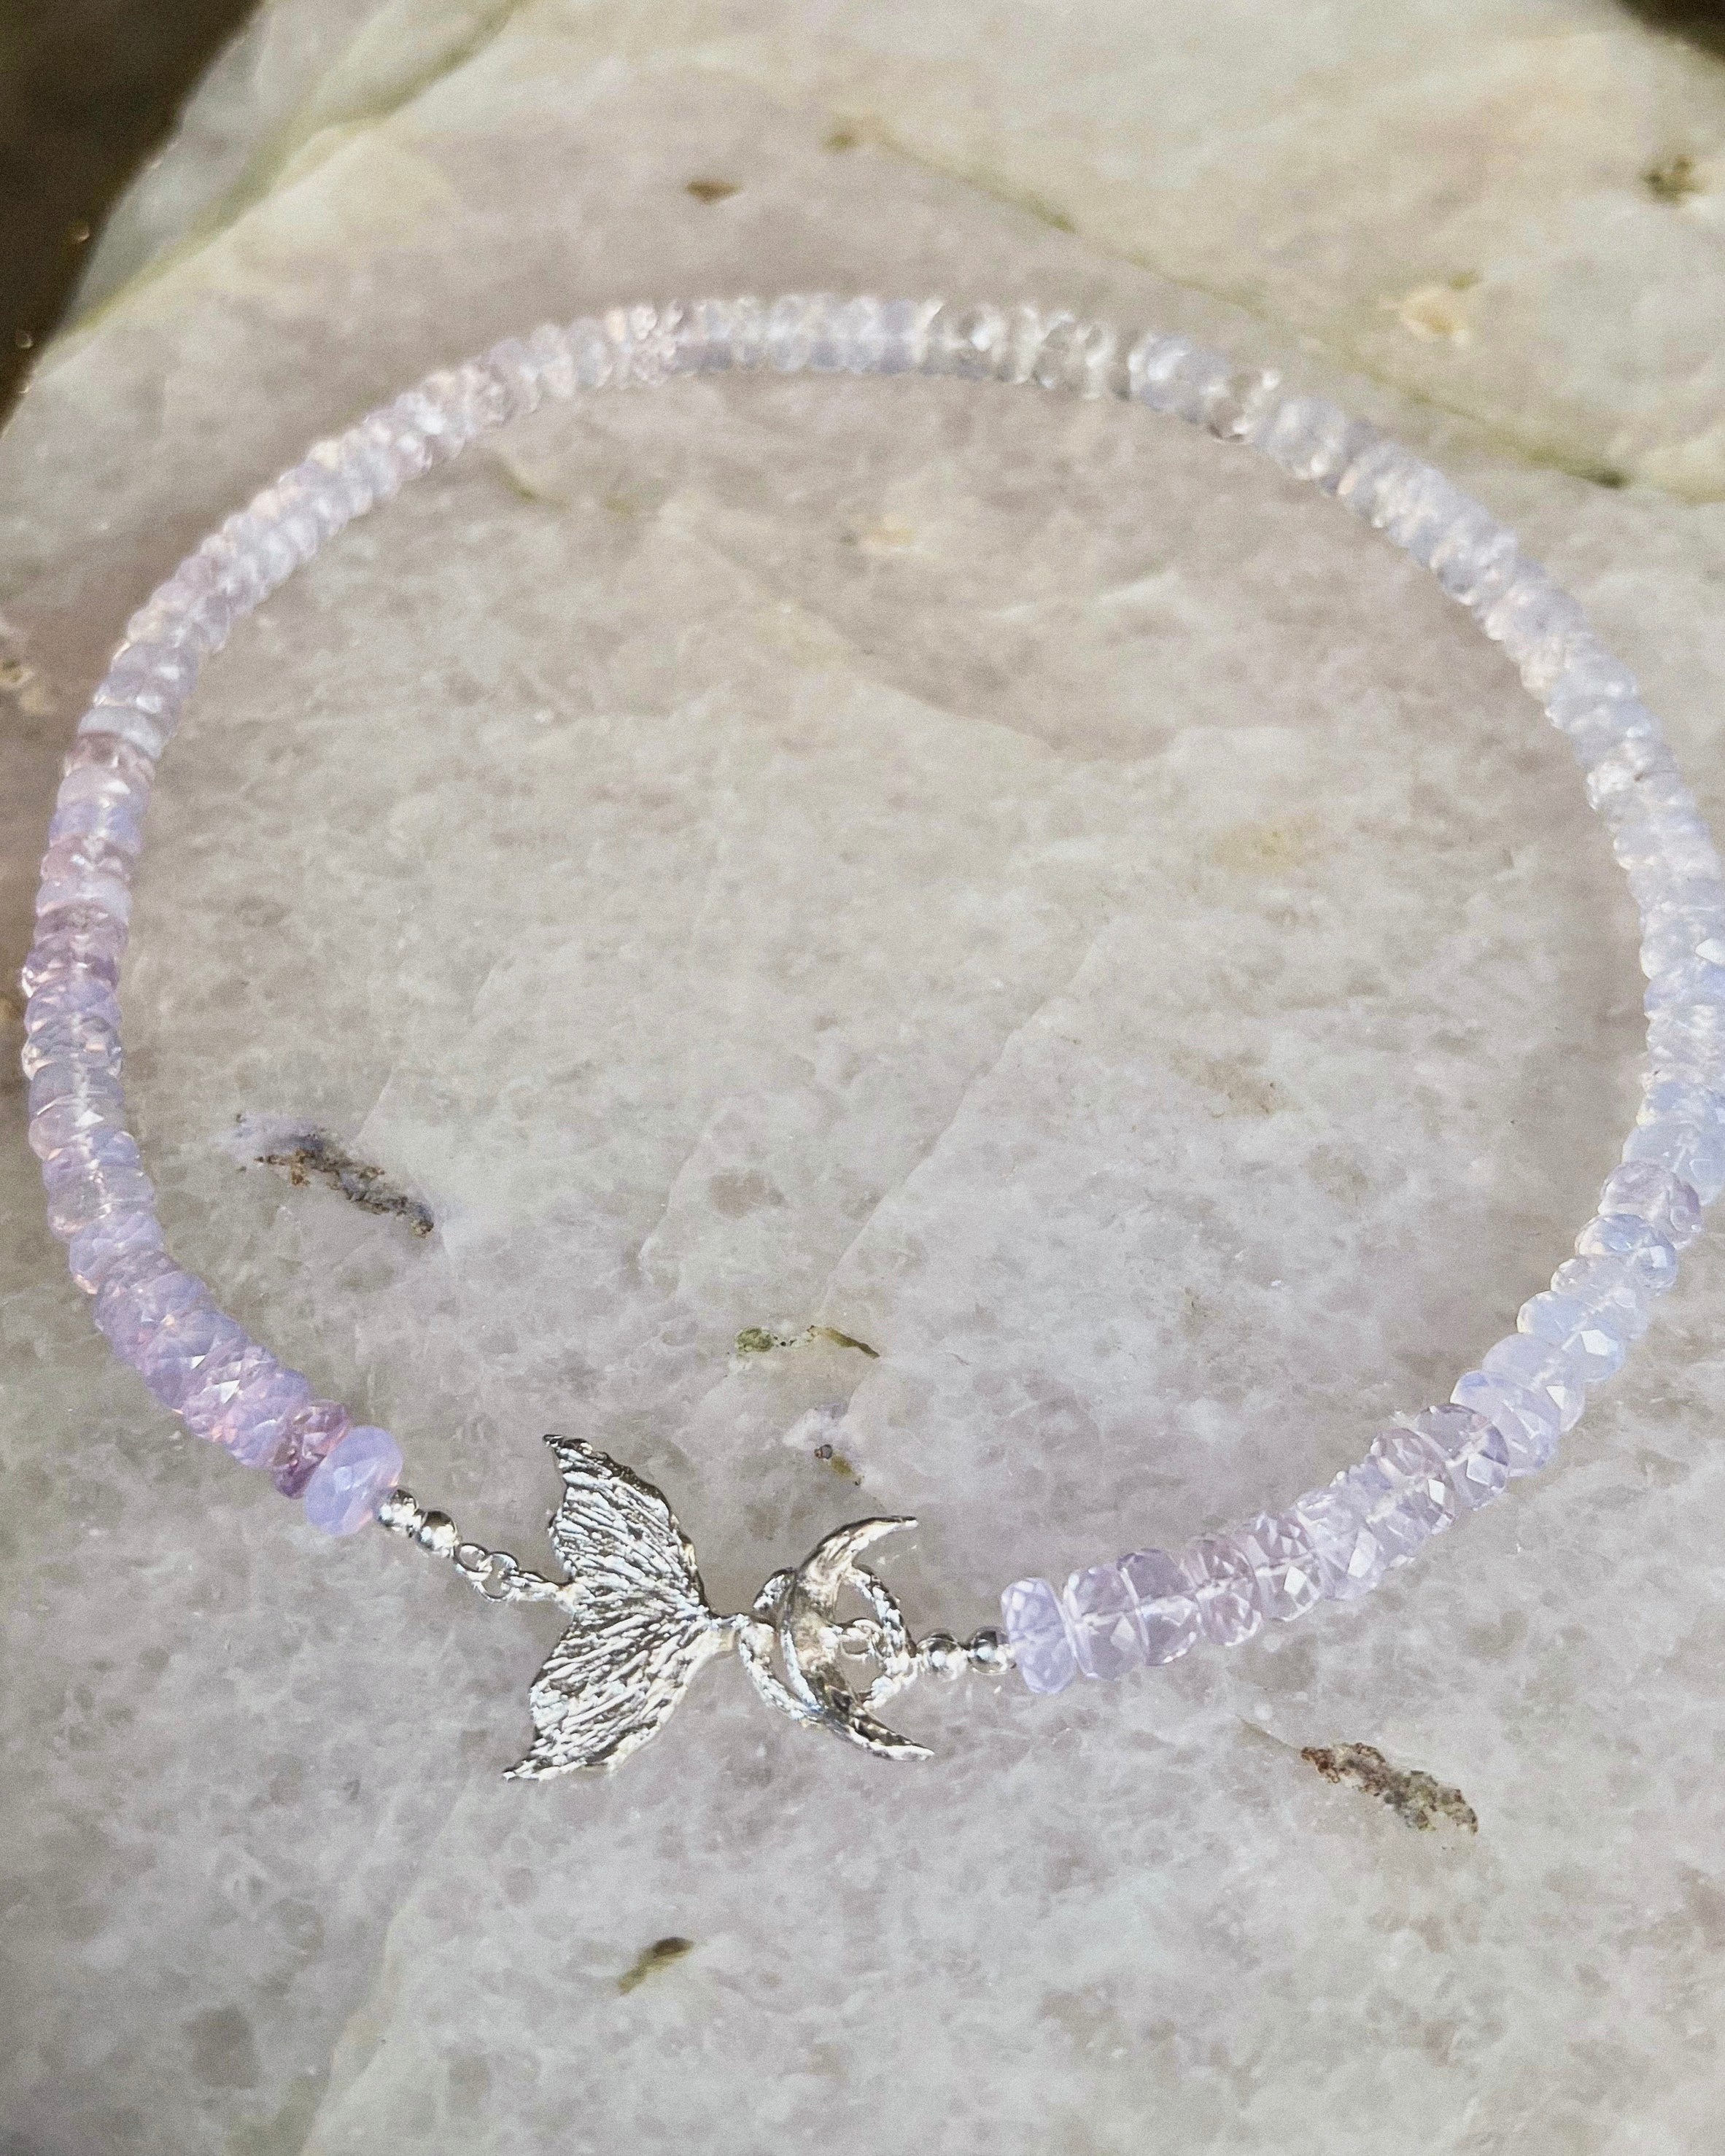 Mermaid Tail Clasp Necklace ⋄ Lavender Moon Quartz